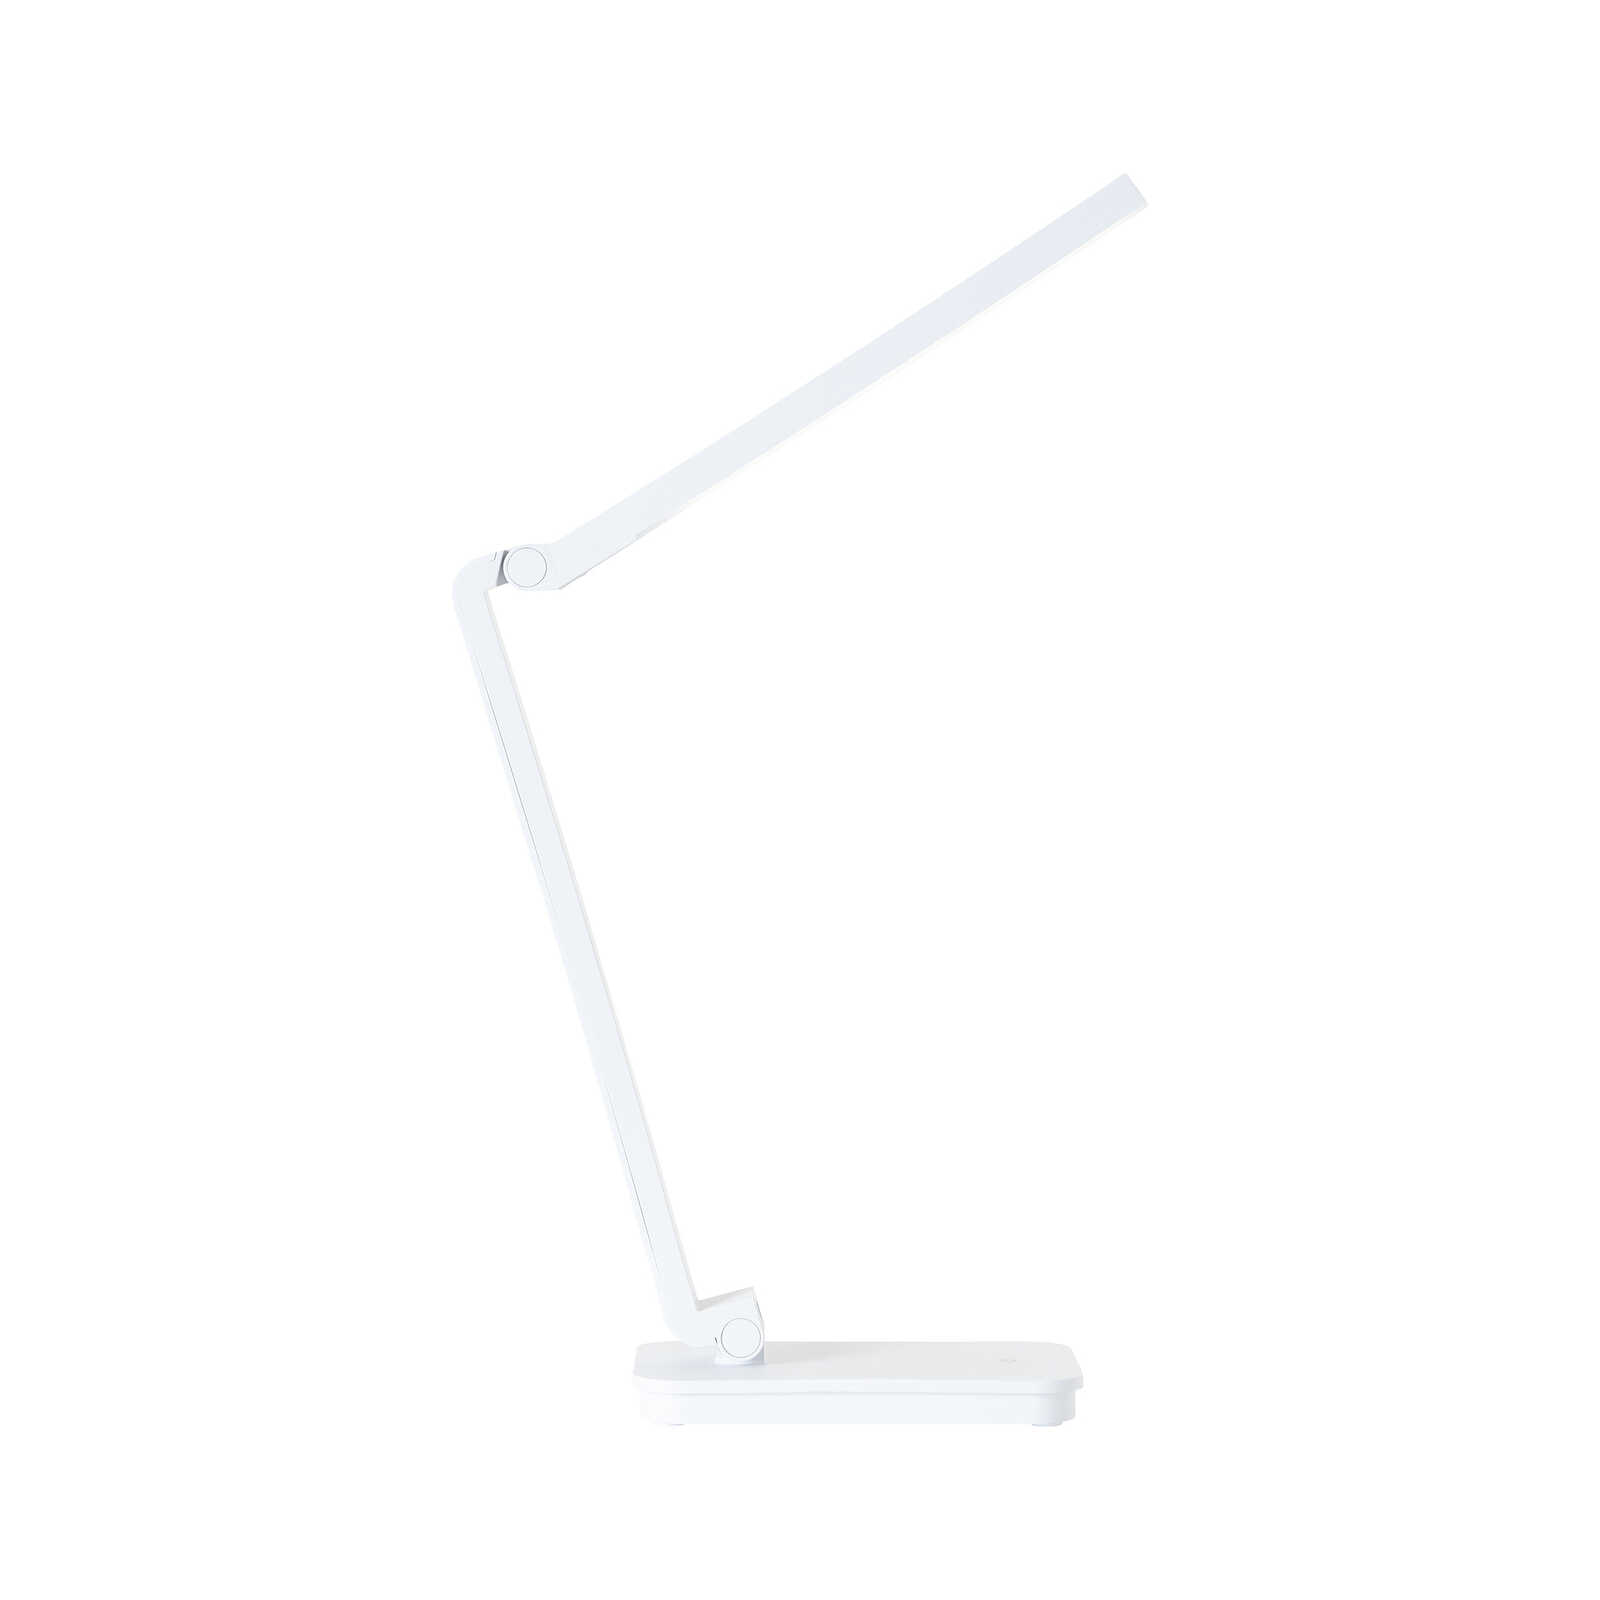 Kunststof tafellamp - Romy 1 - Wit
